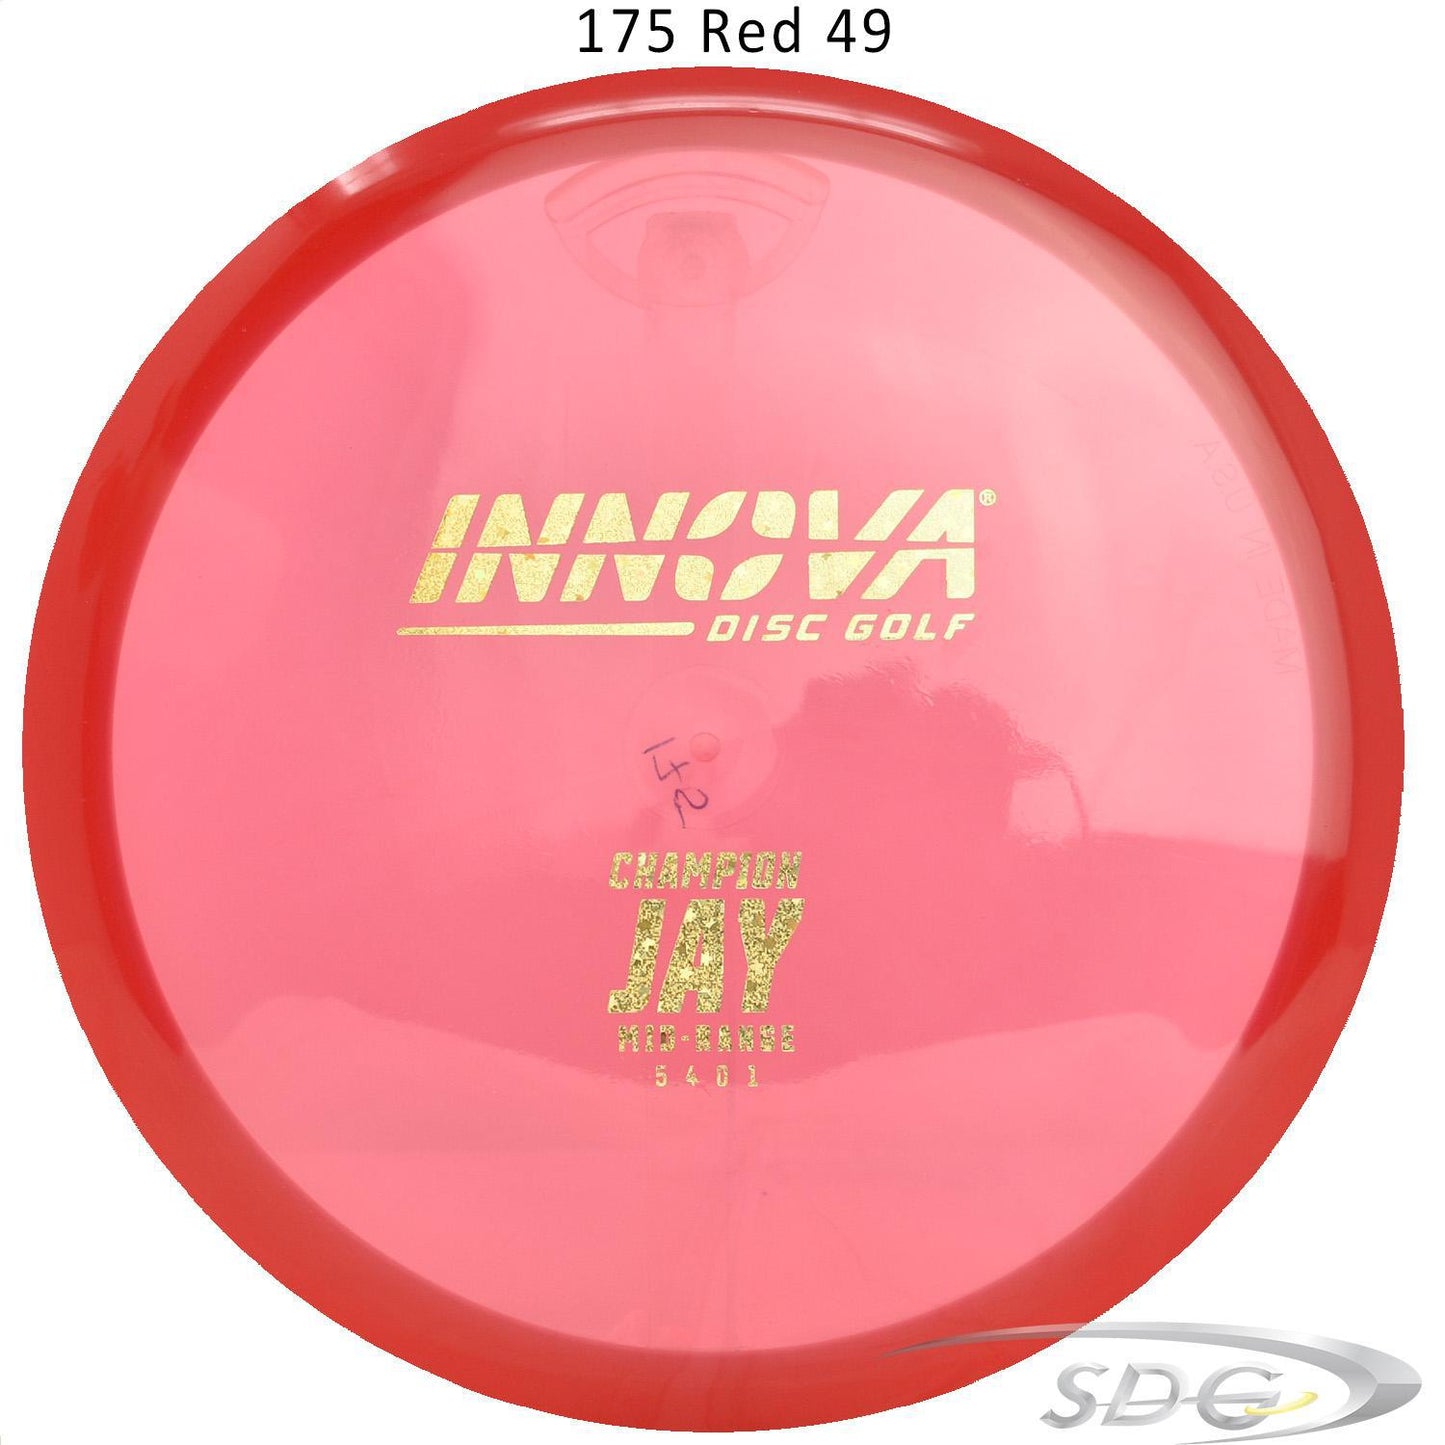 innova-champion-jay-disc-golf-mid-range 175 Red 49 